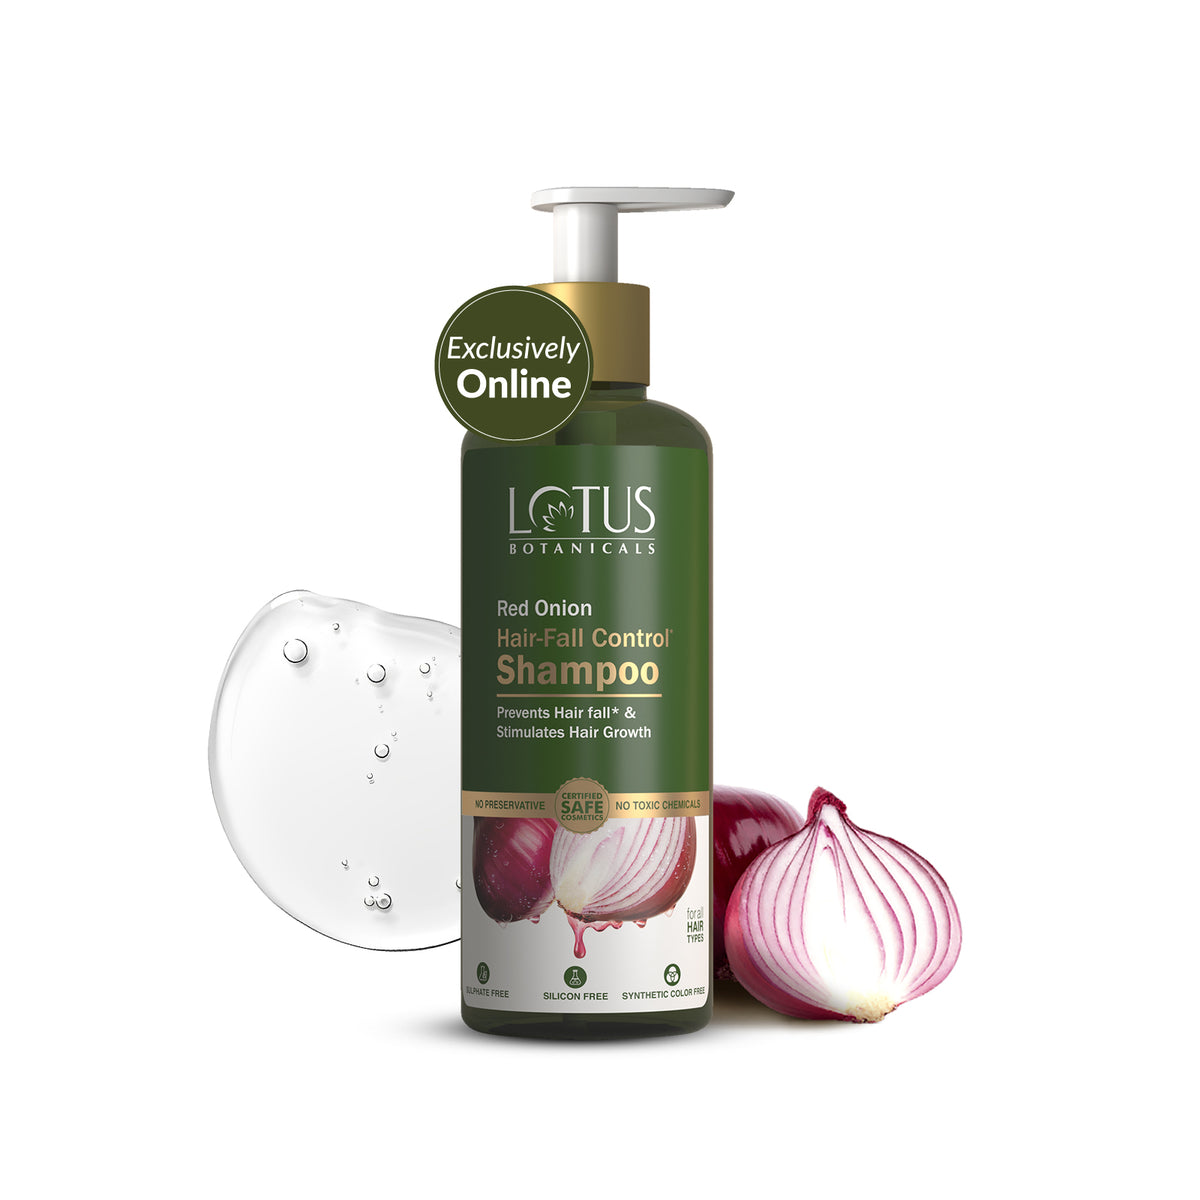 Red Onion Hair-Fall Control Shampoo